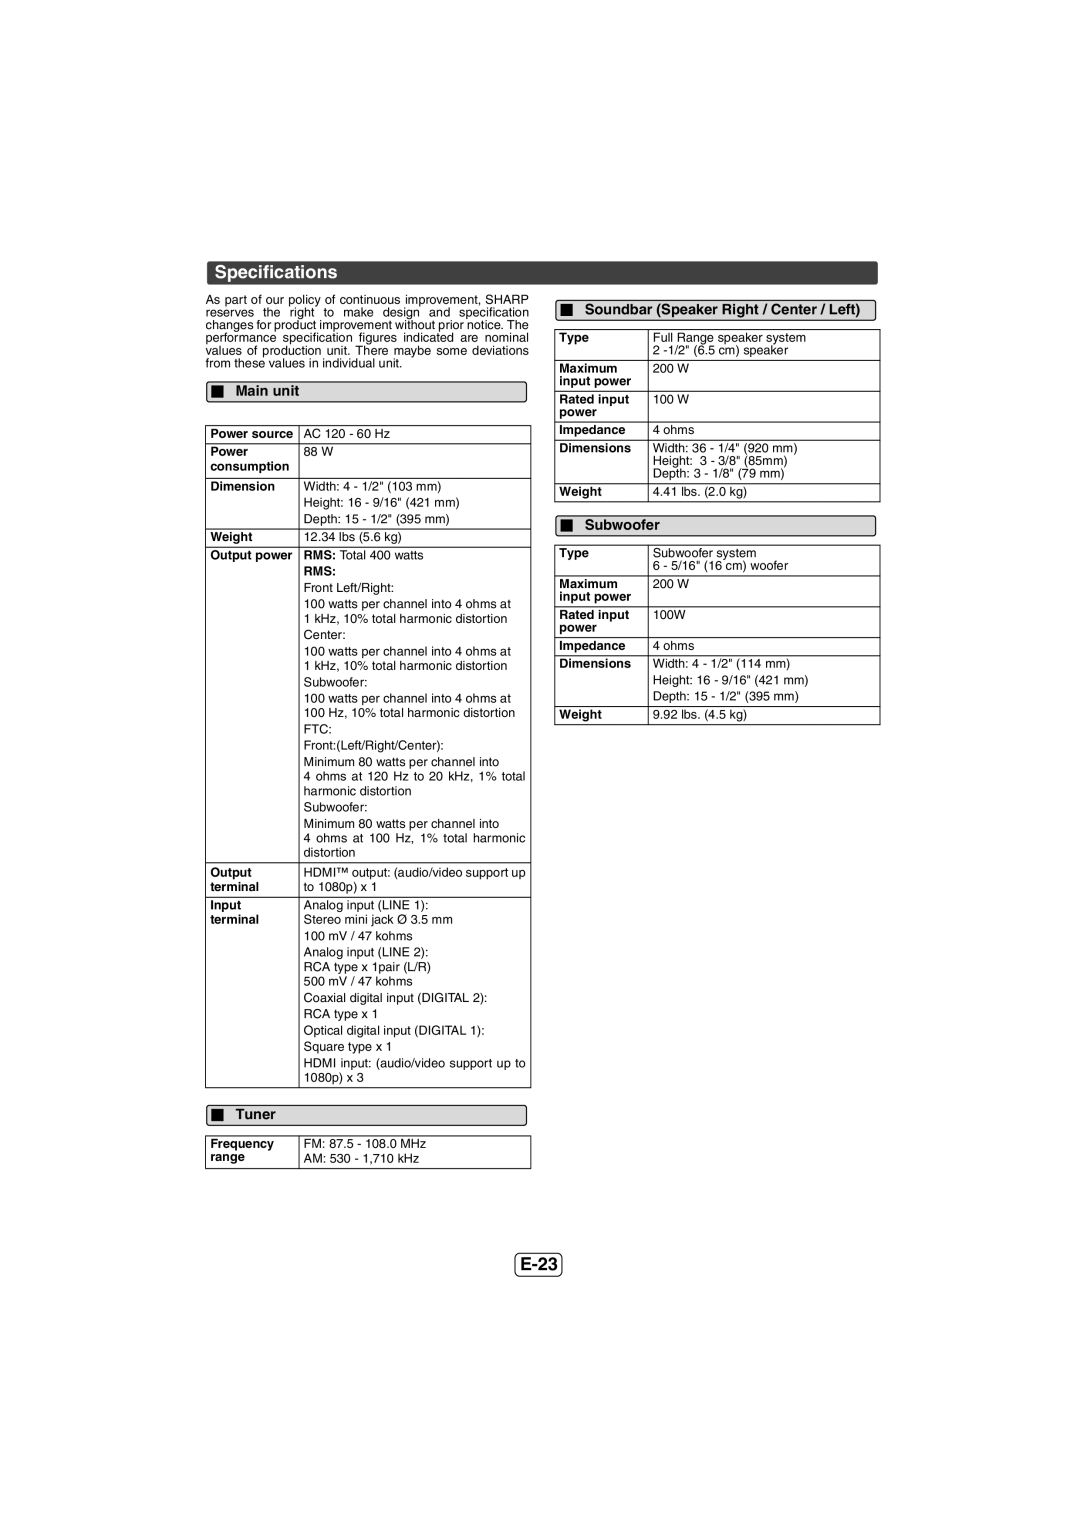 Sharp HT-SB600, HTSB600 operation manual Specifications, E-23 